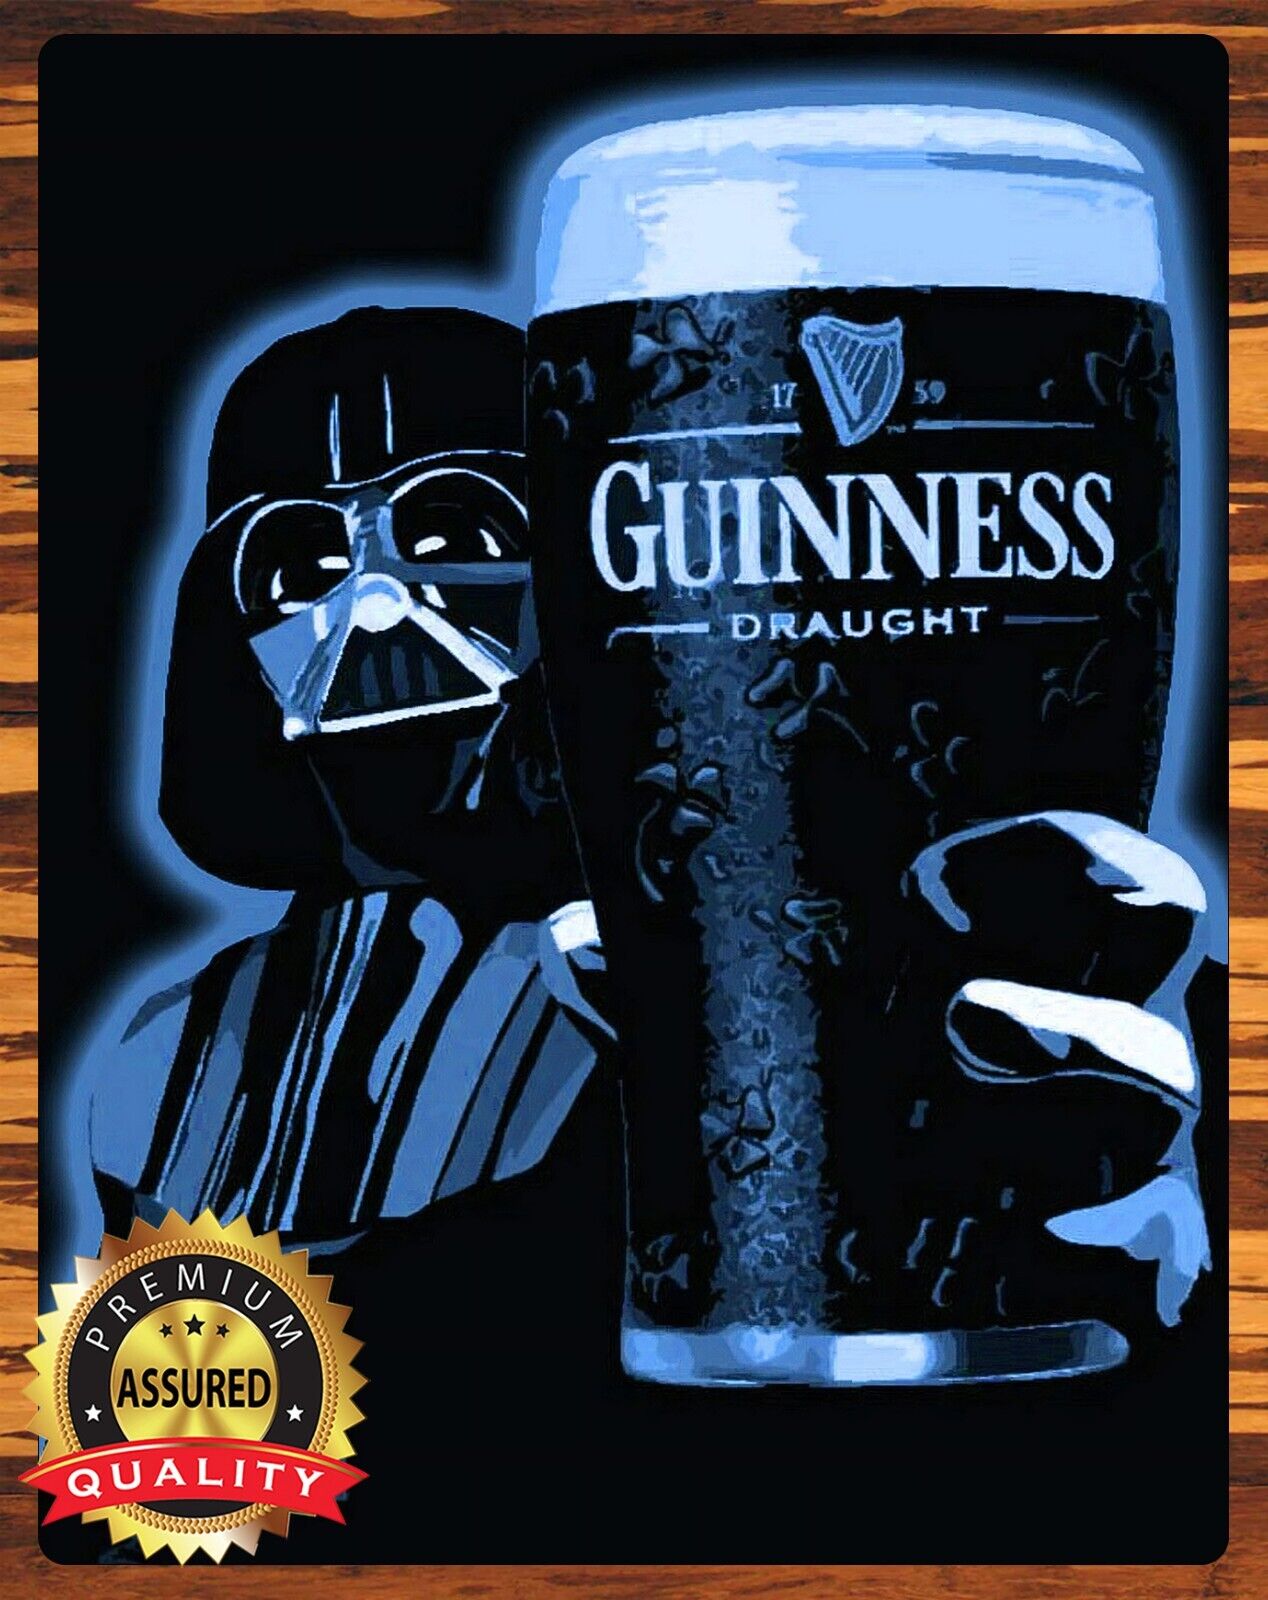 Guinness Draught - Star Wars - Darth Vader - Metal Sign 11 x 14